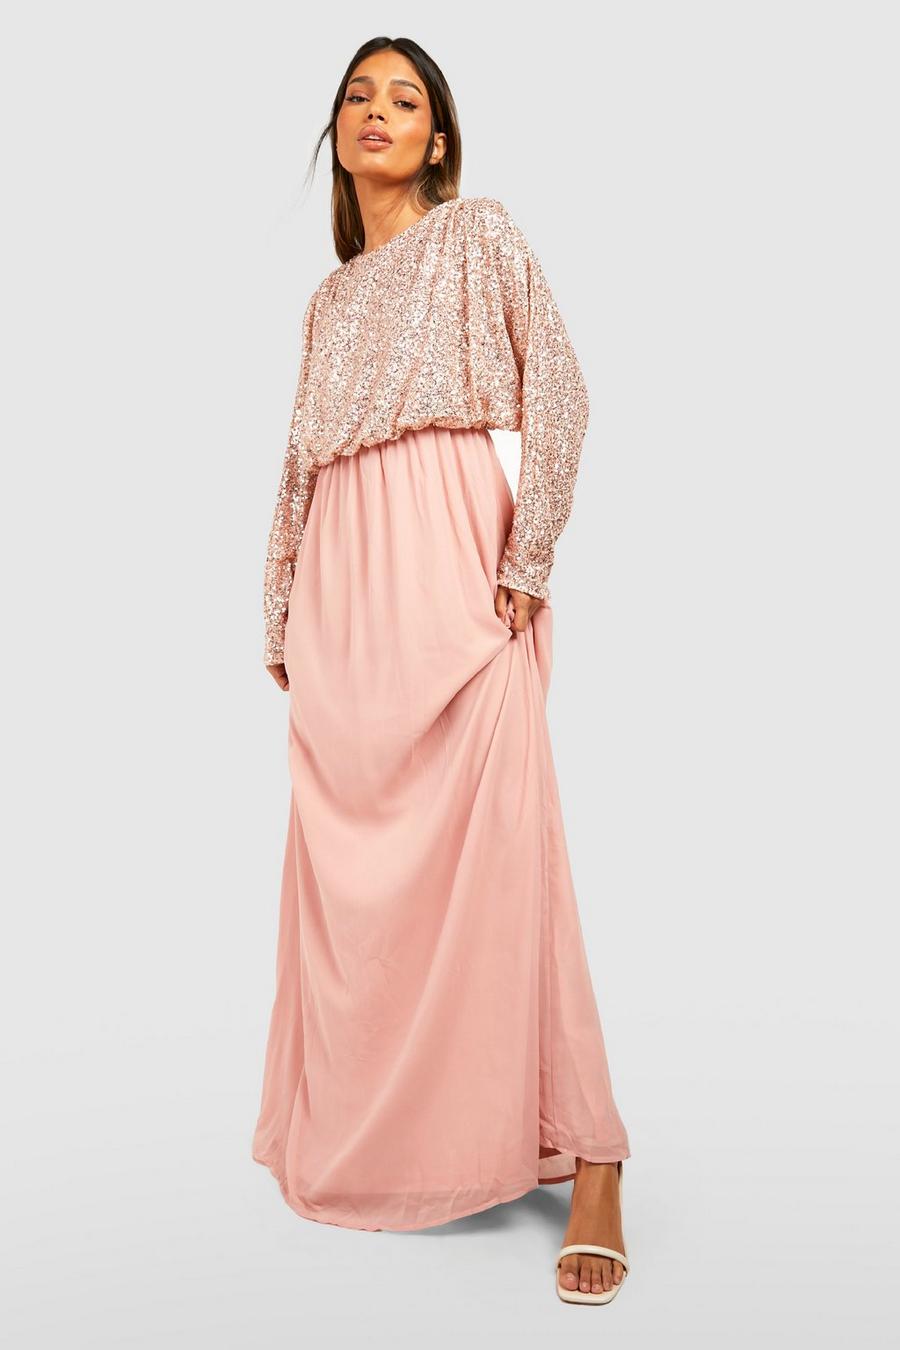 Blush pink Sequin Batwing Maxi Bridesmaid Dress